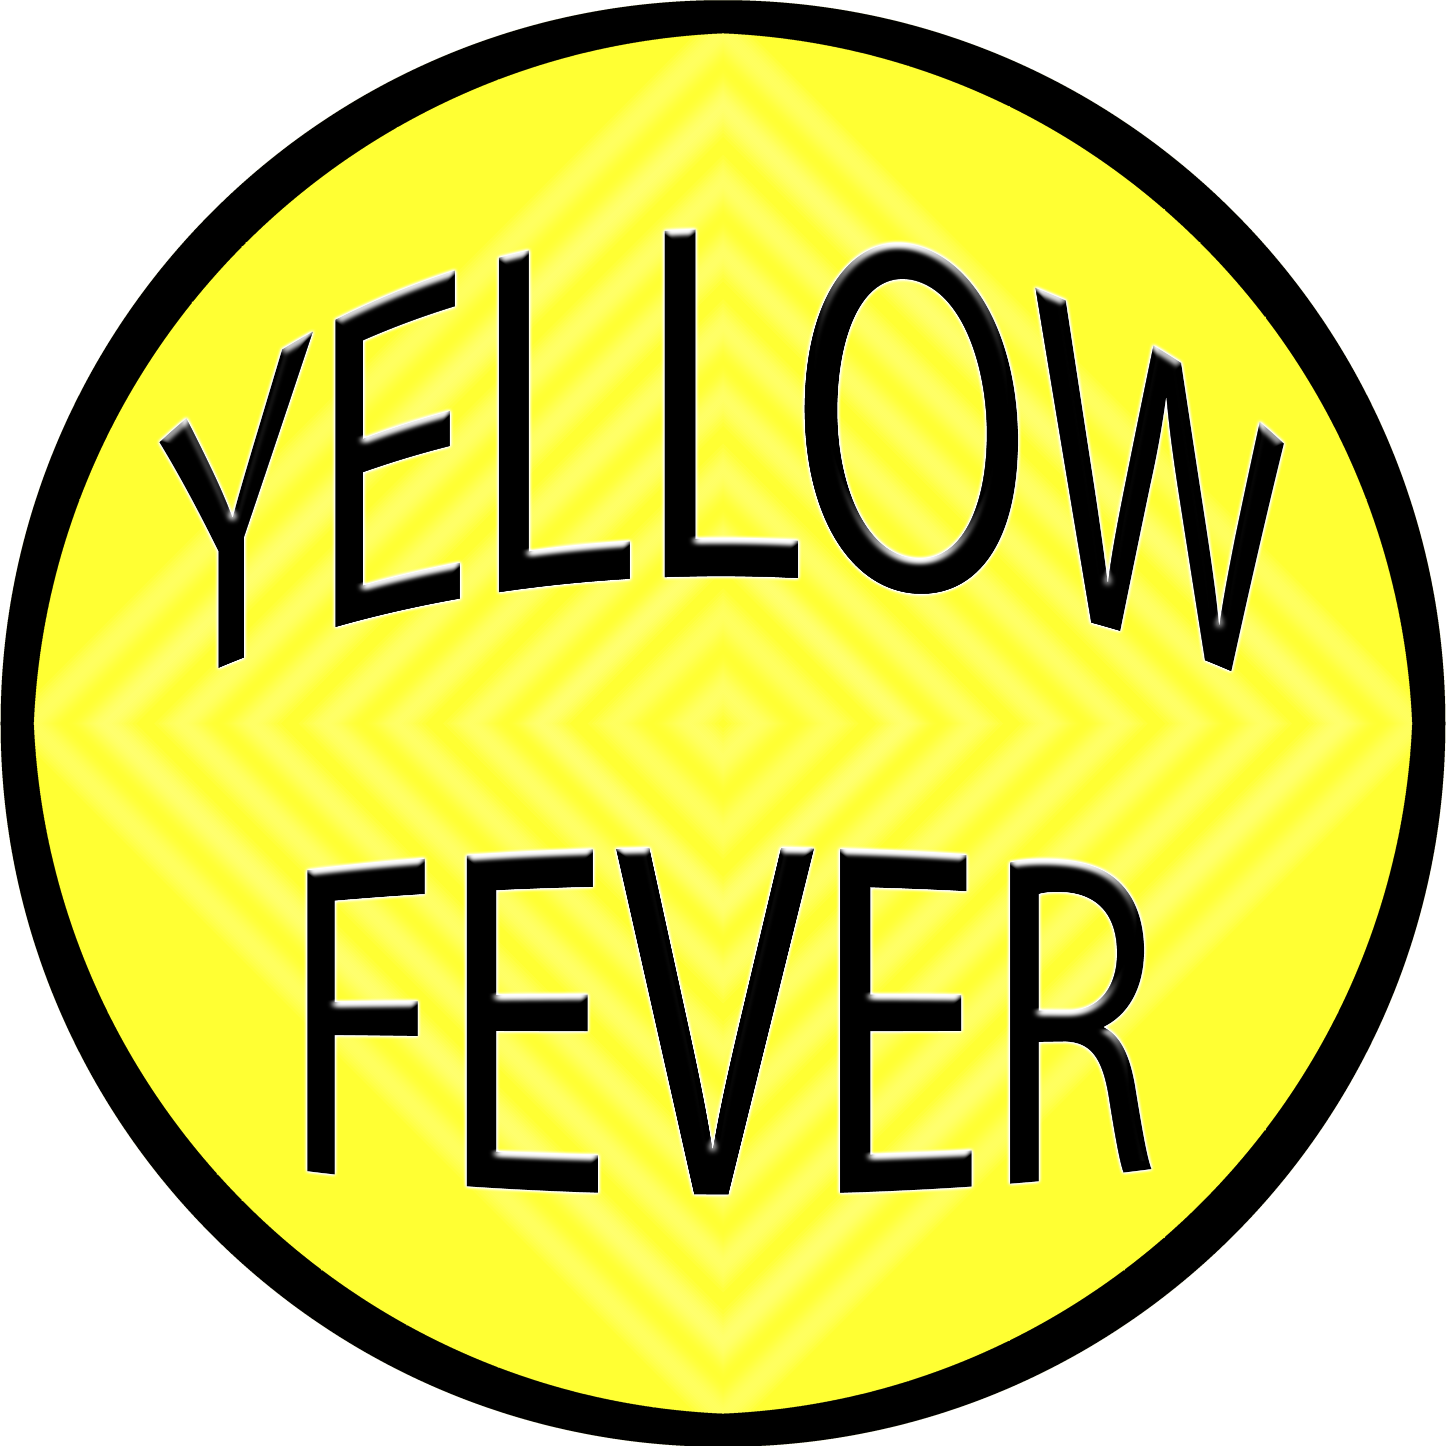 Fever sign